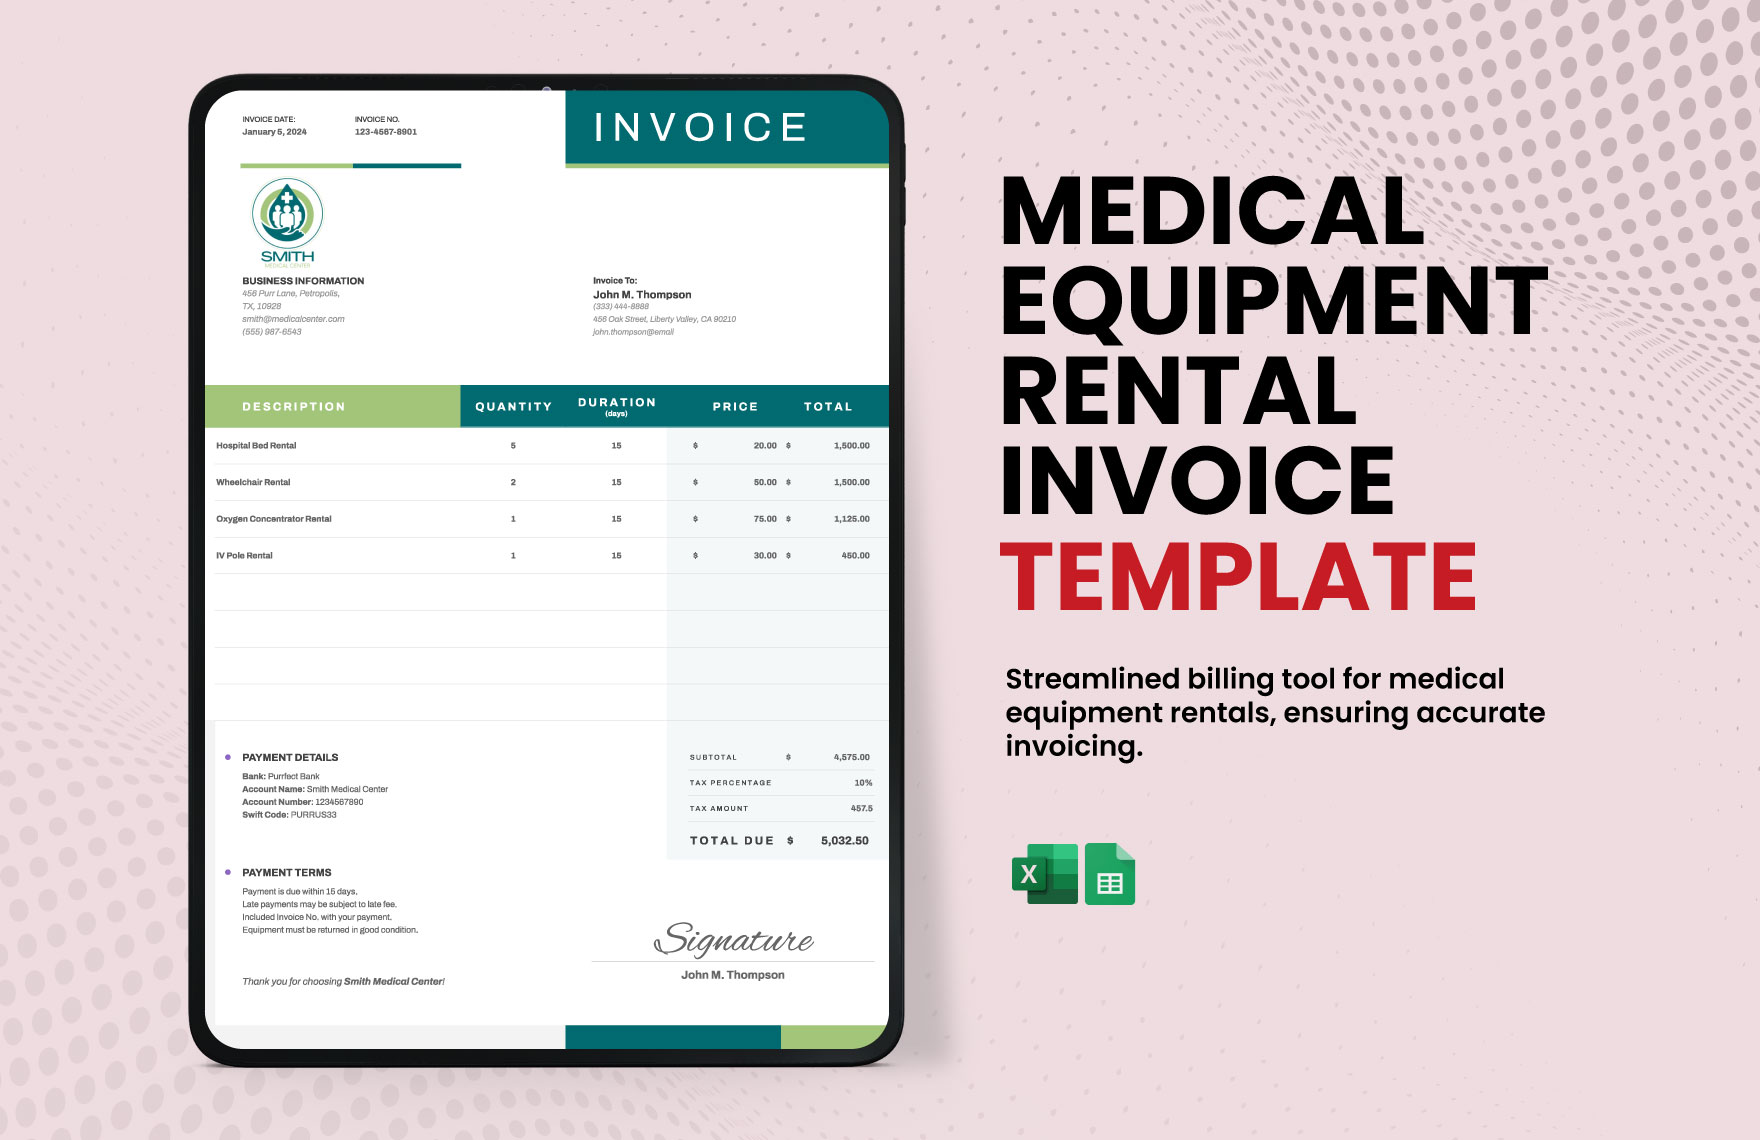 Medical Equipment Rental Invoice Template